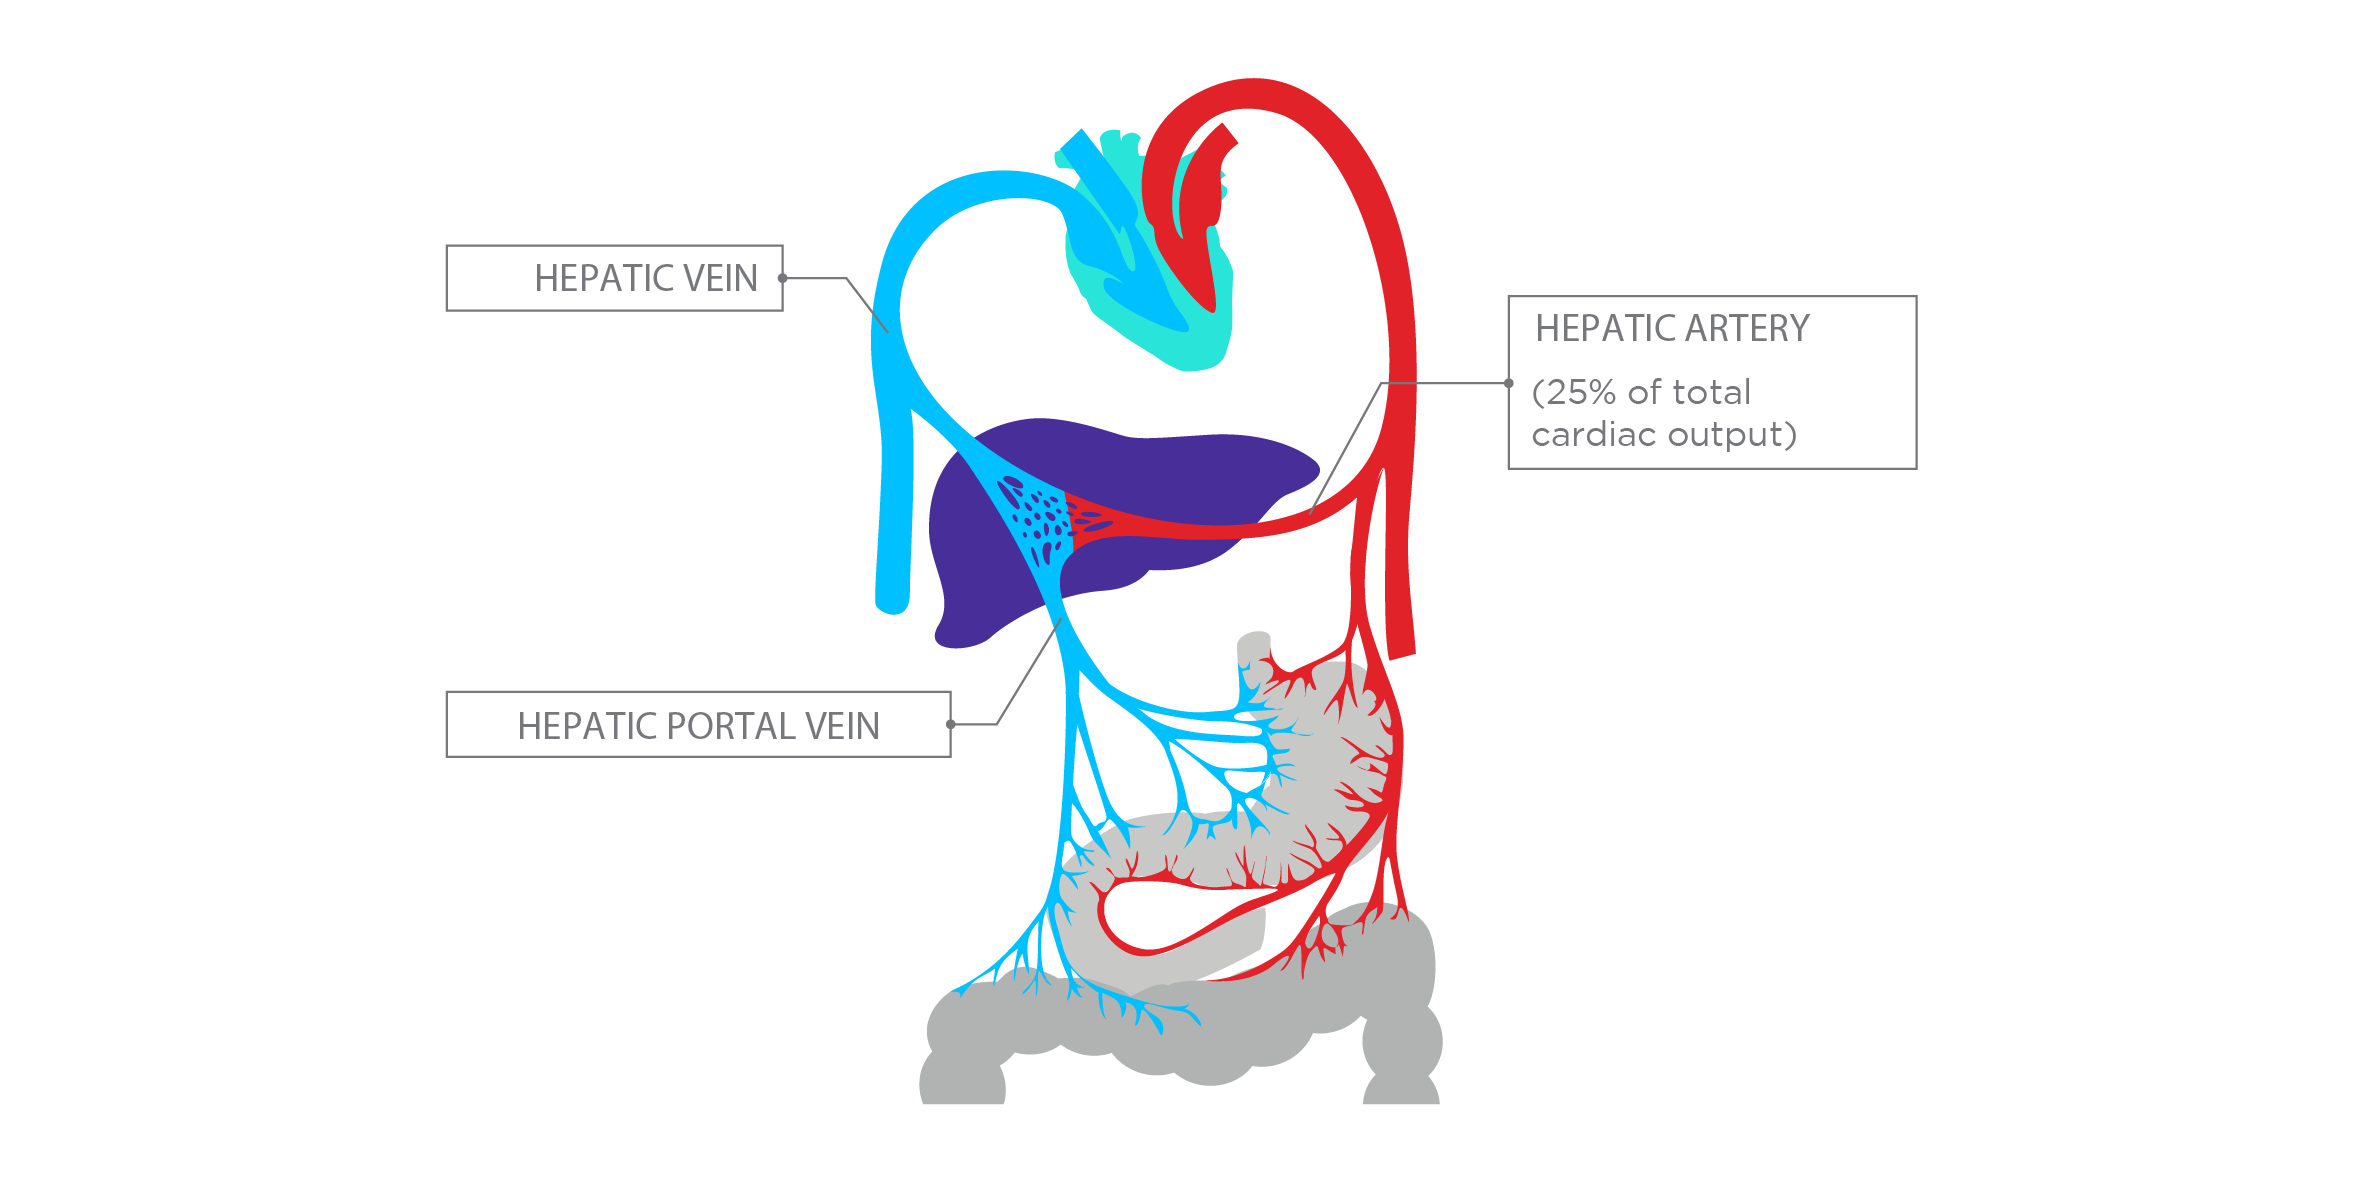 Liver Anatomy